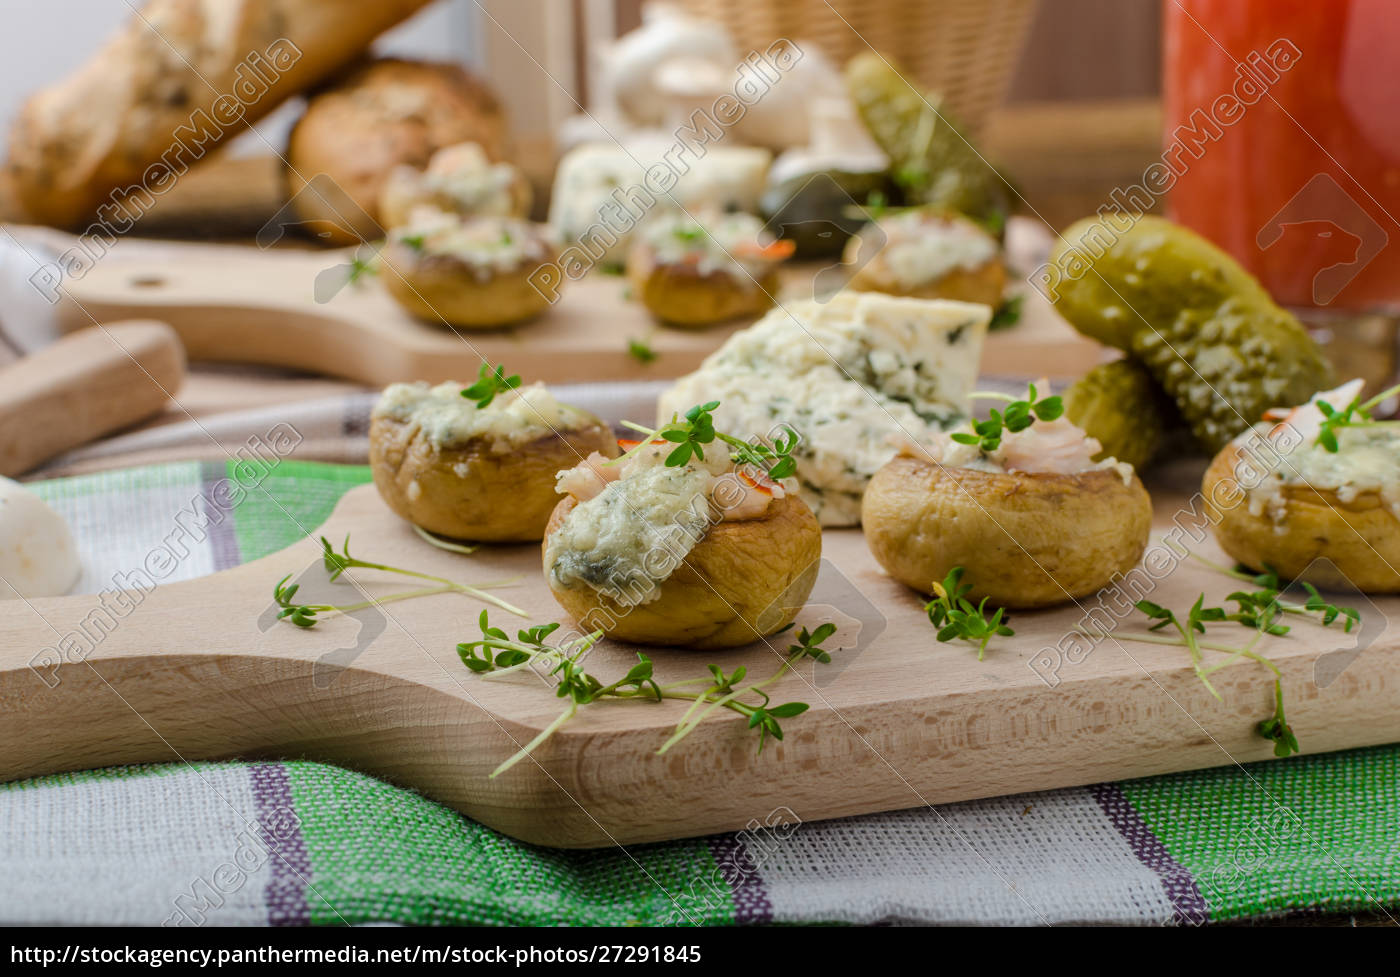 Pilze gefüllt mit Käse - Lizenzfreies Bild - #27291845 | Bildagentur ...